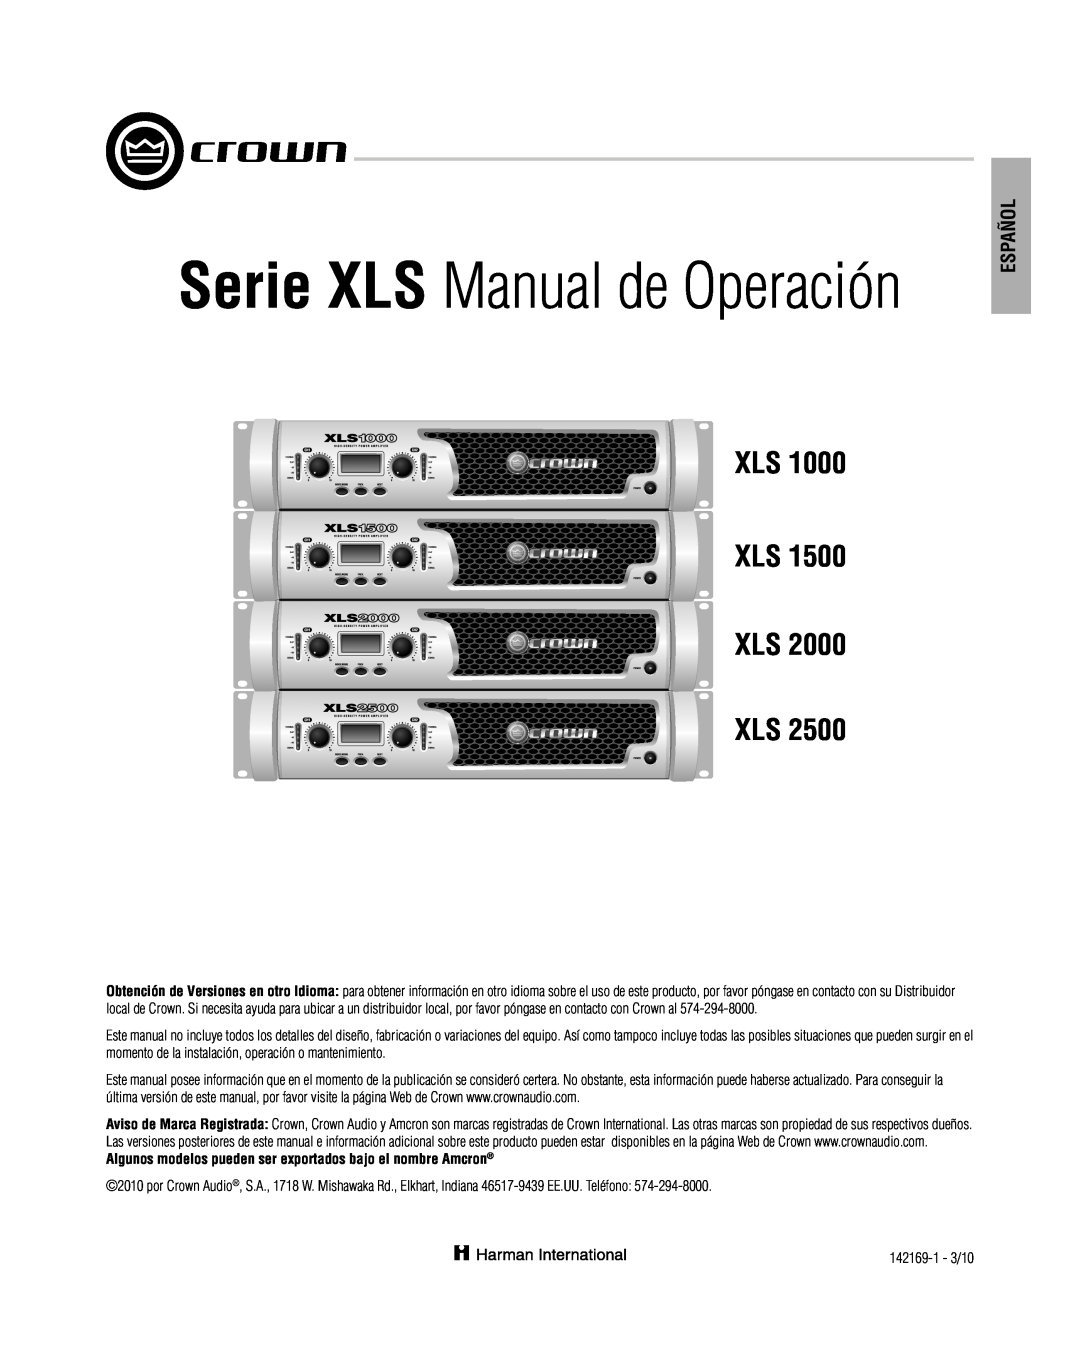 Crown XLS 1000 operation manual Serie XLS Manual de Operación, Español, Xls Xls Xls Xls 